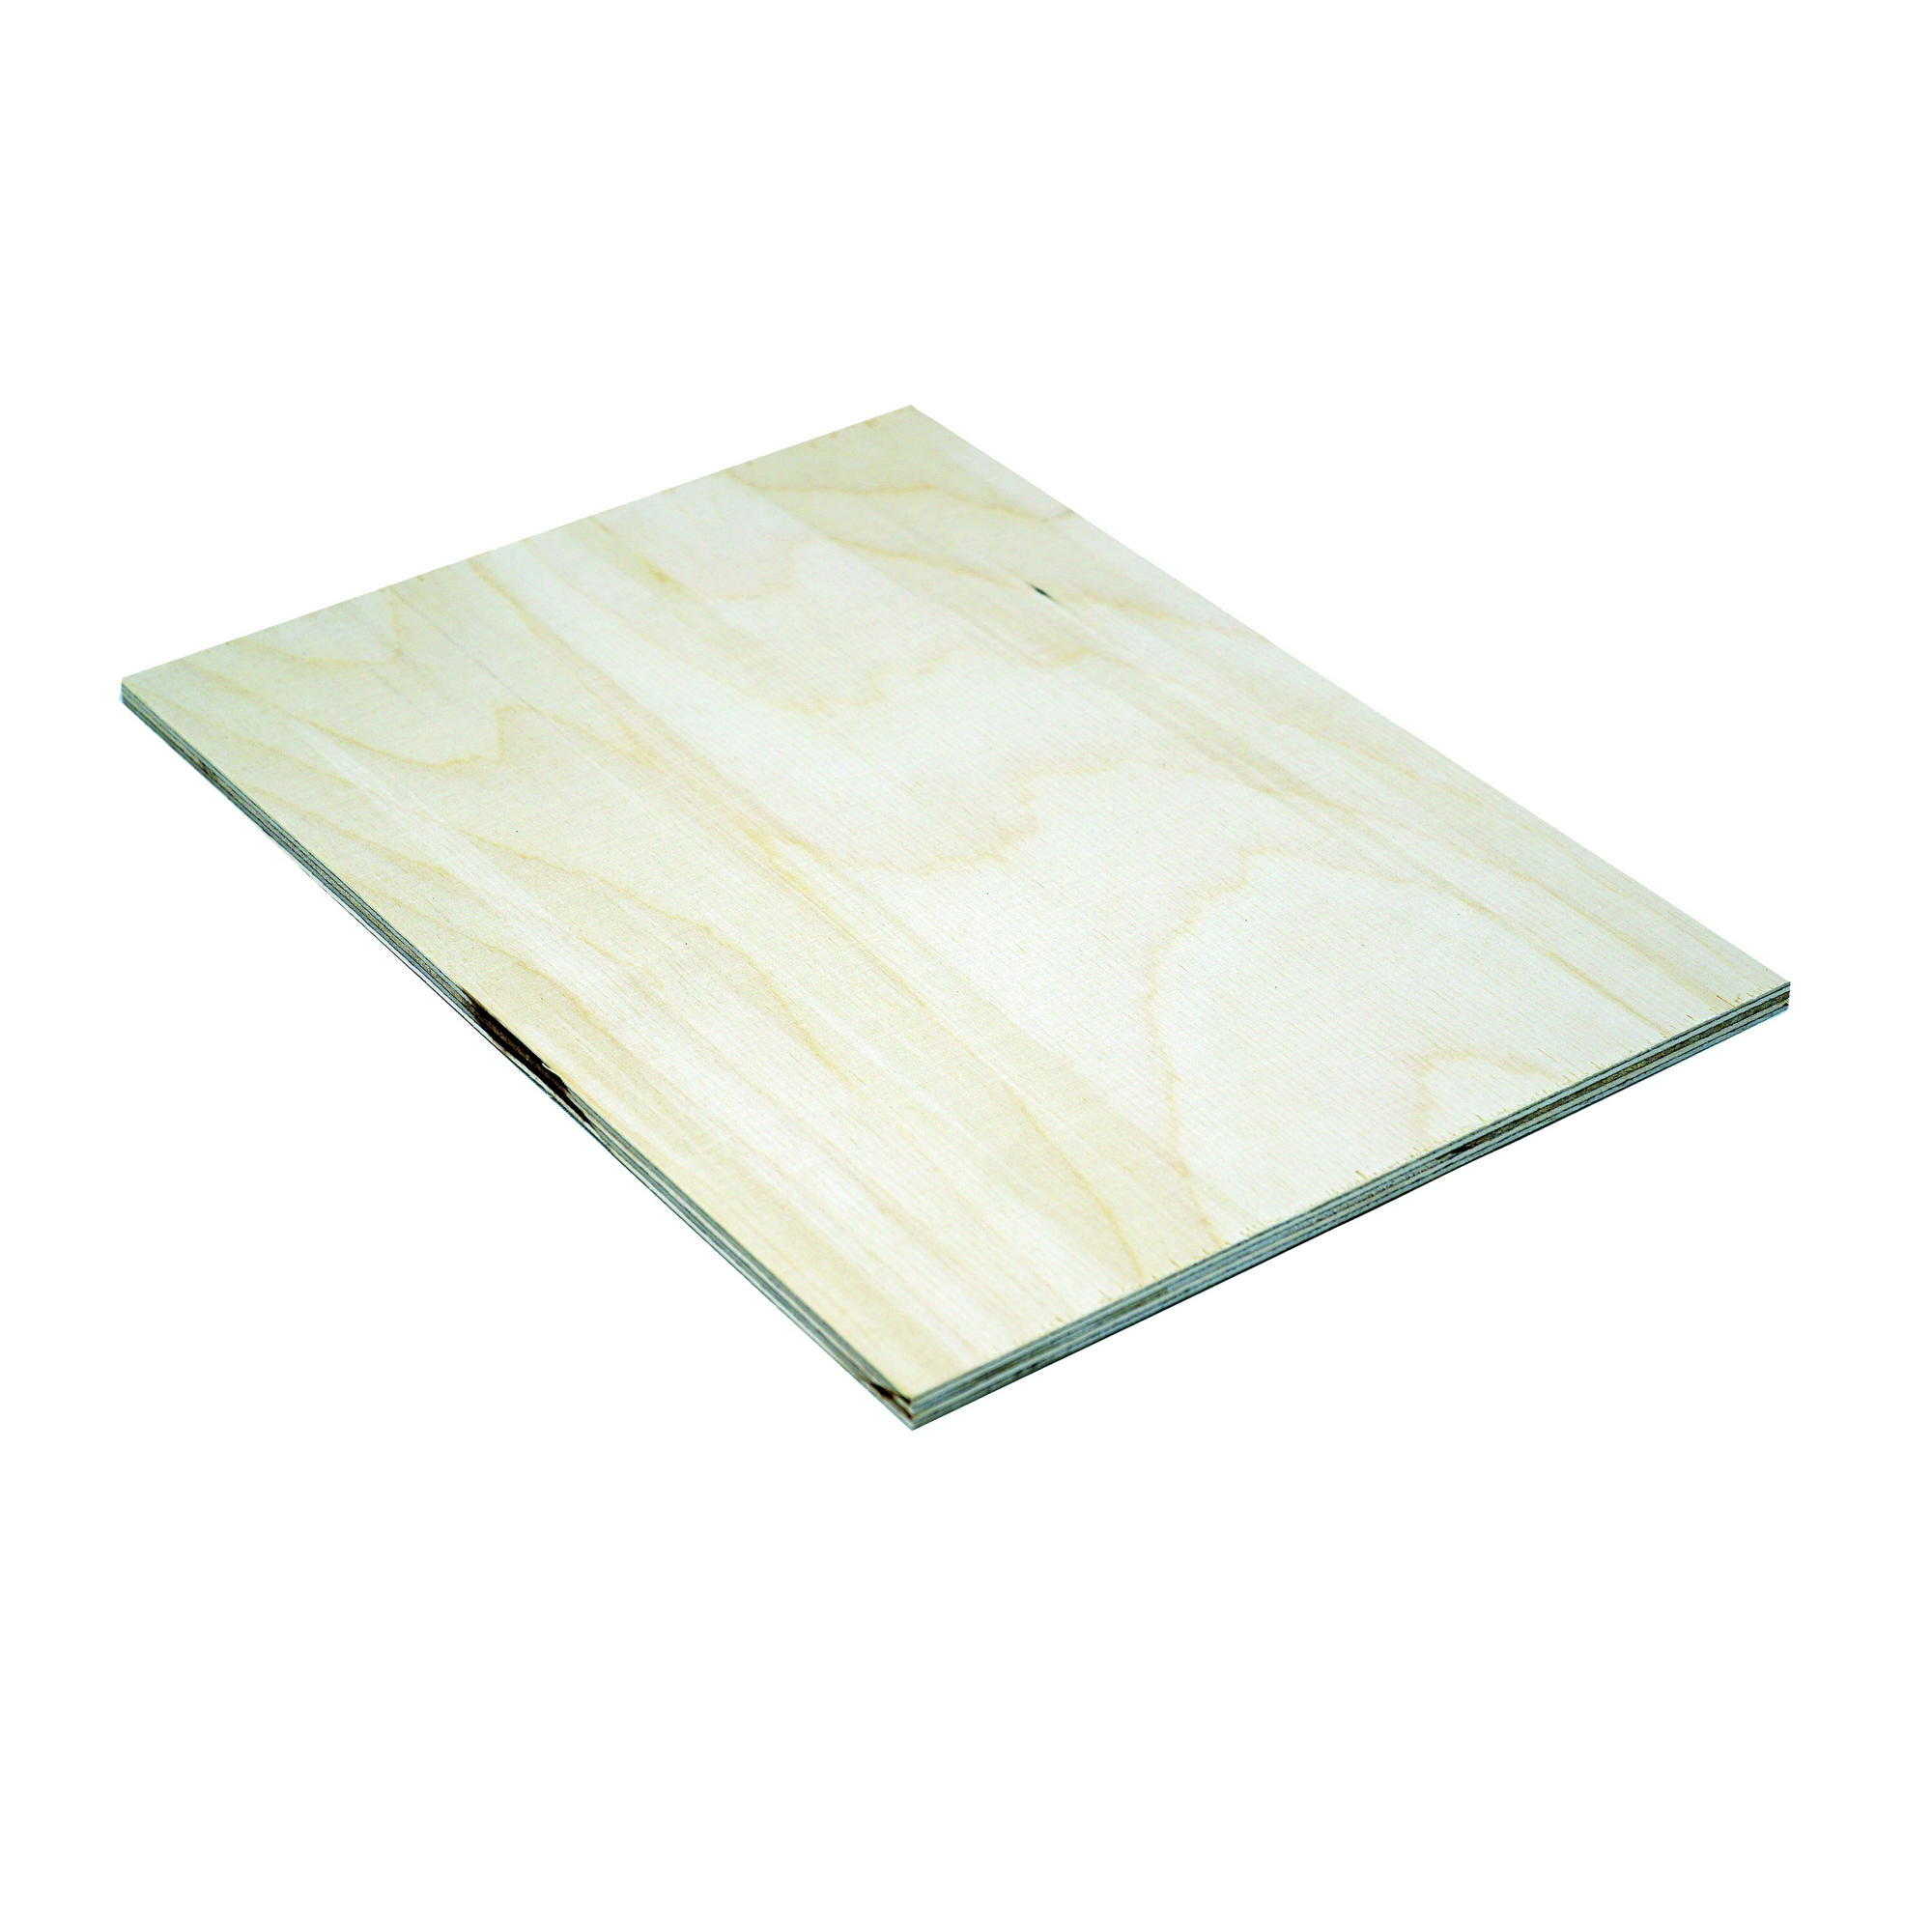 1 Platte Sperrholz Multiplex Birke 3 mm 50 x 50 cm 8,9€/m² Holzplatte 